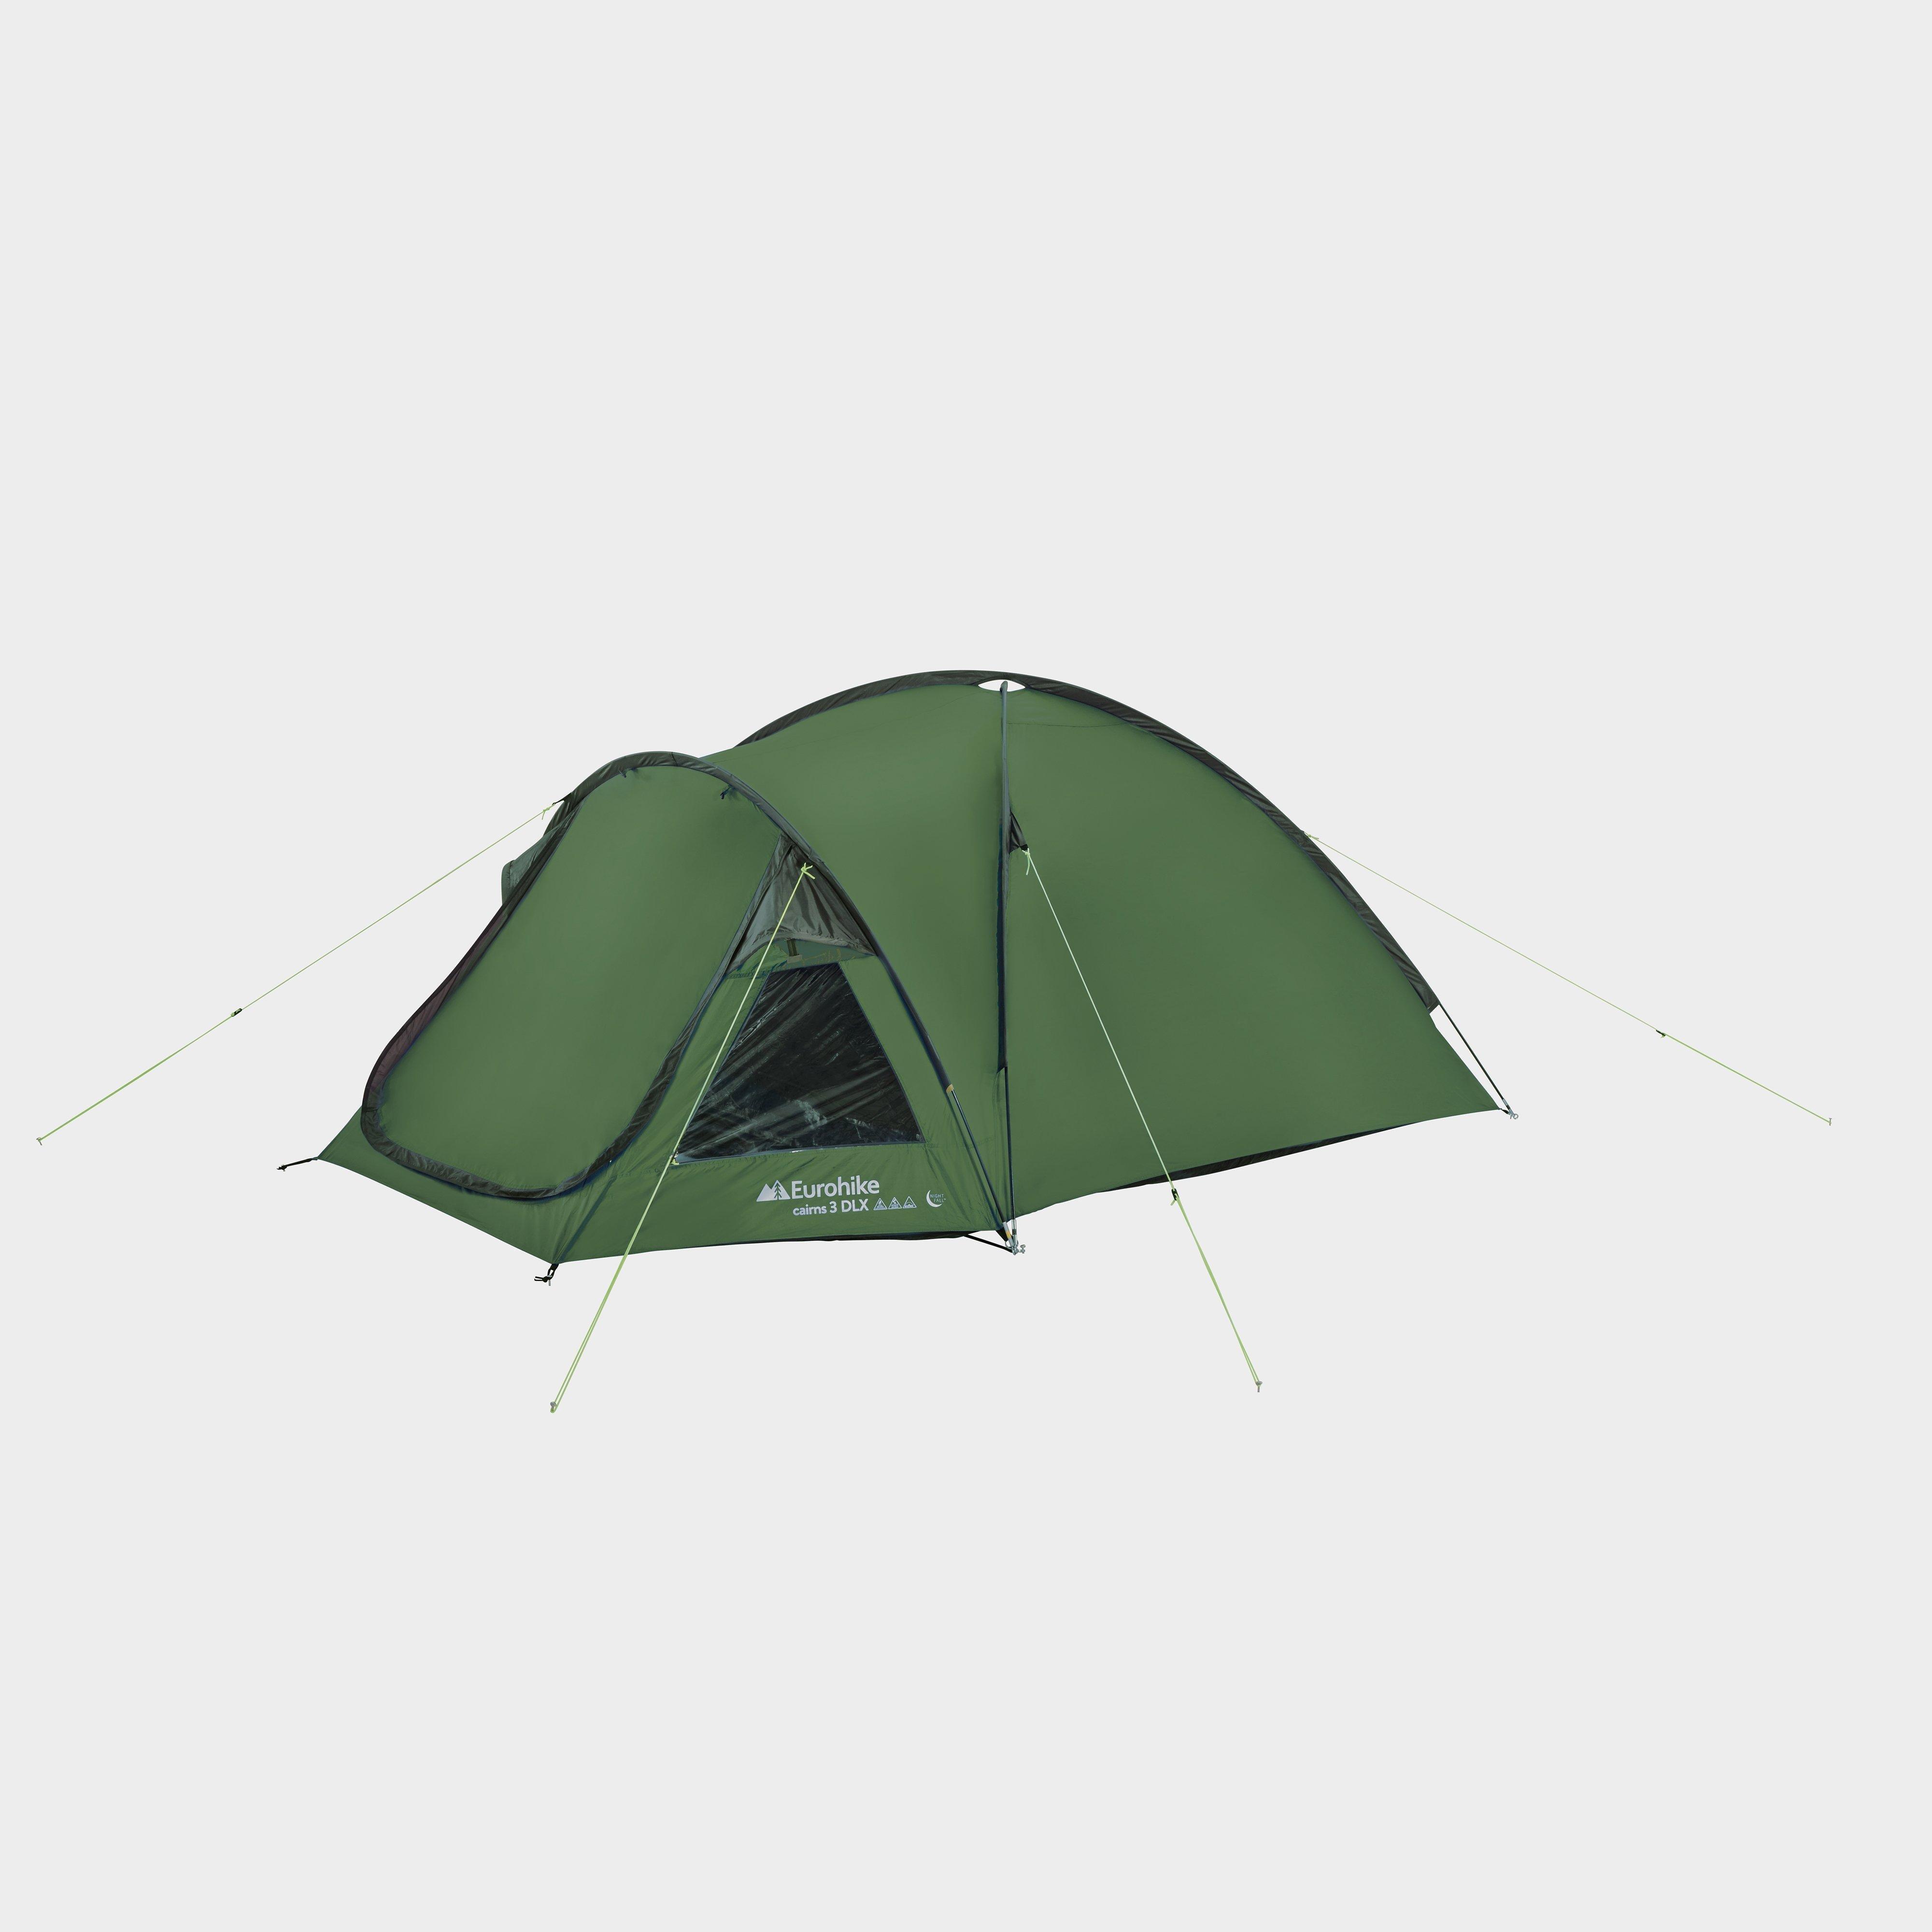  Eurohike Cairns 3 DLX Nightfall Tent, Green